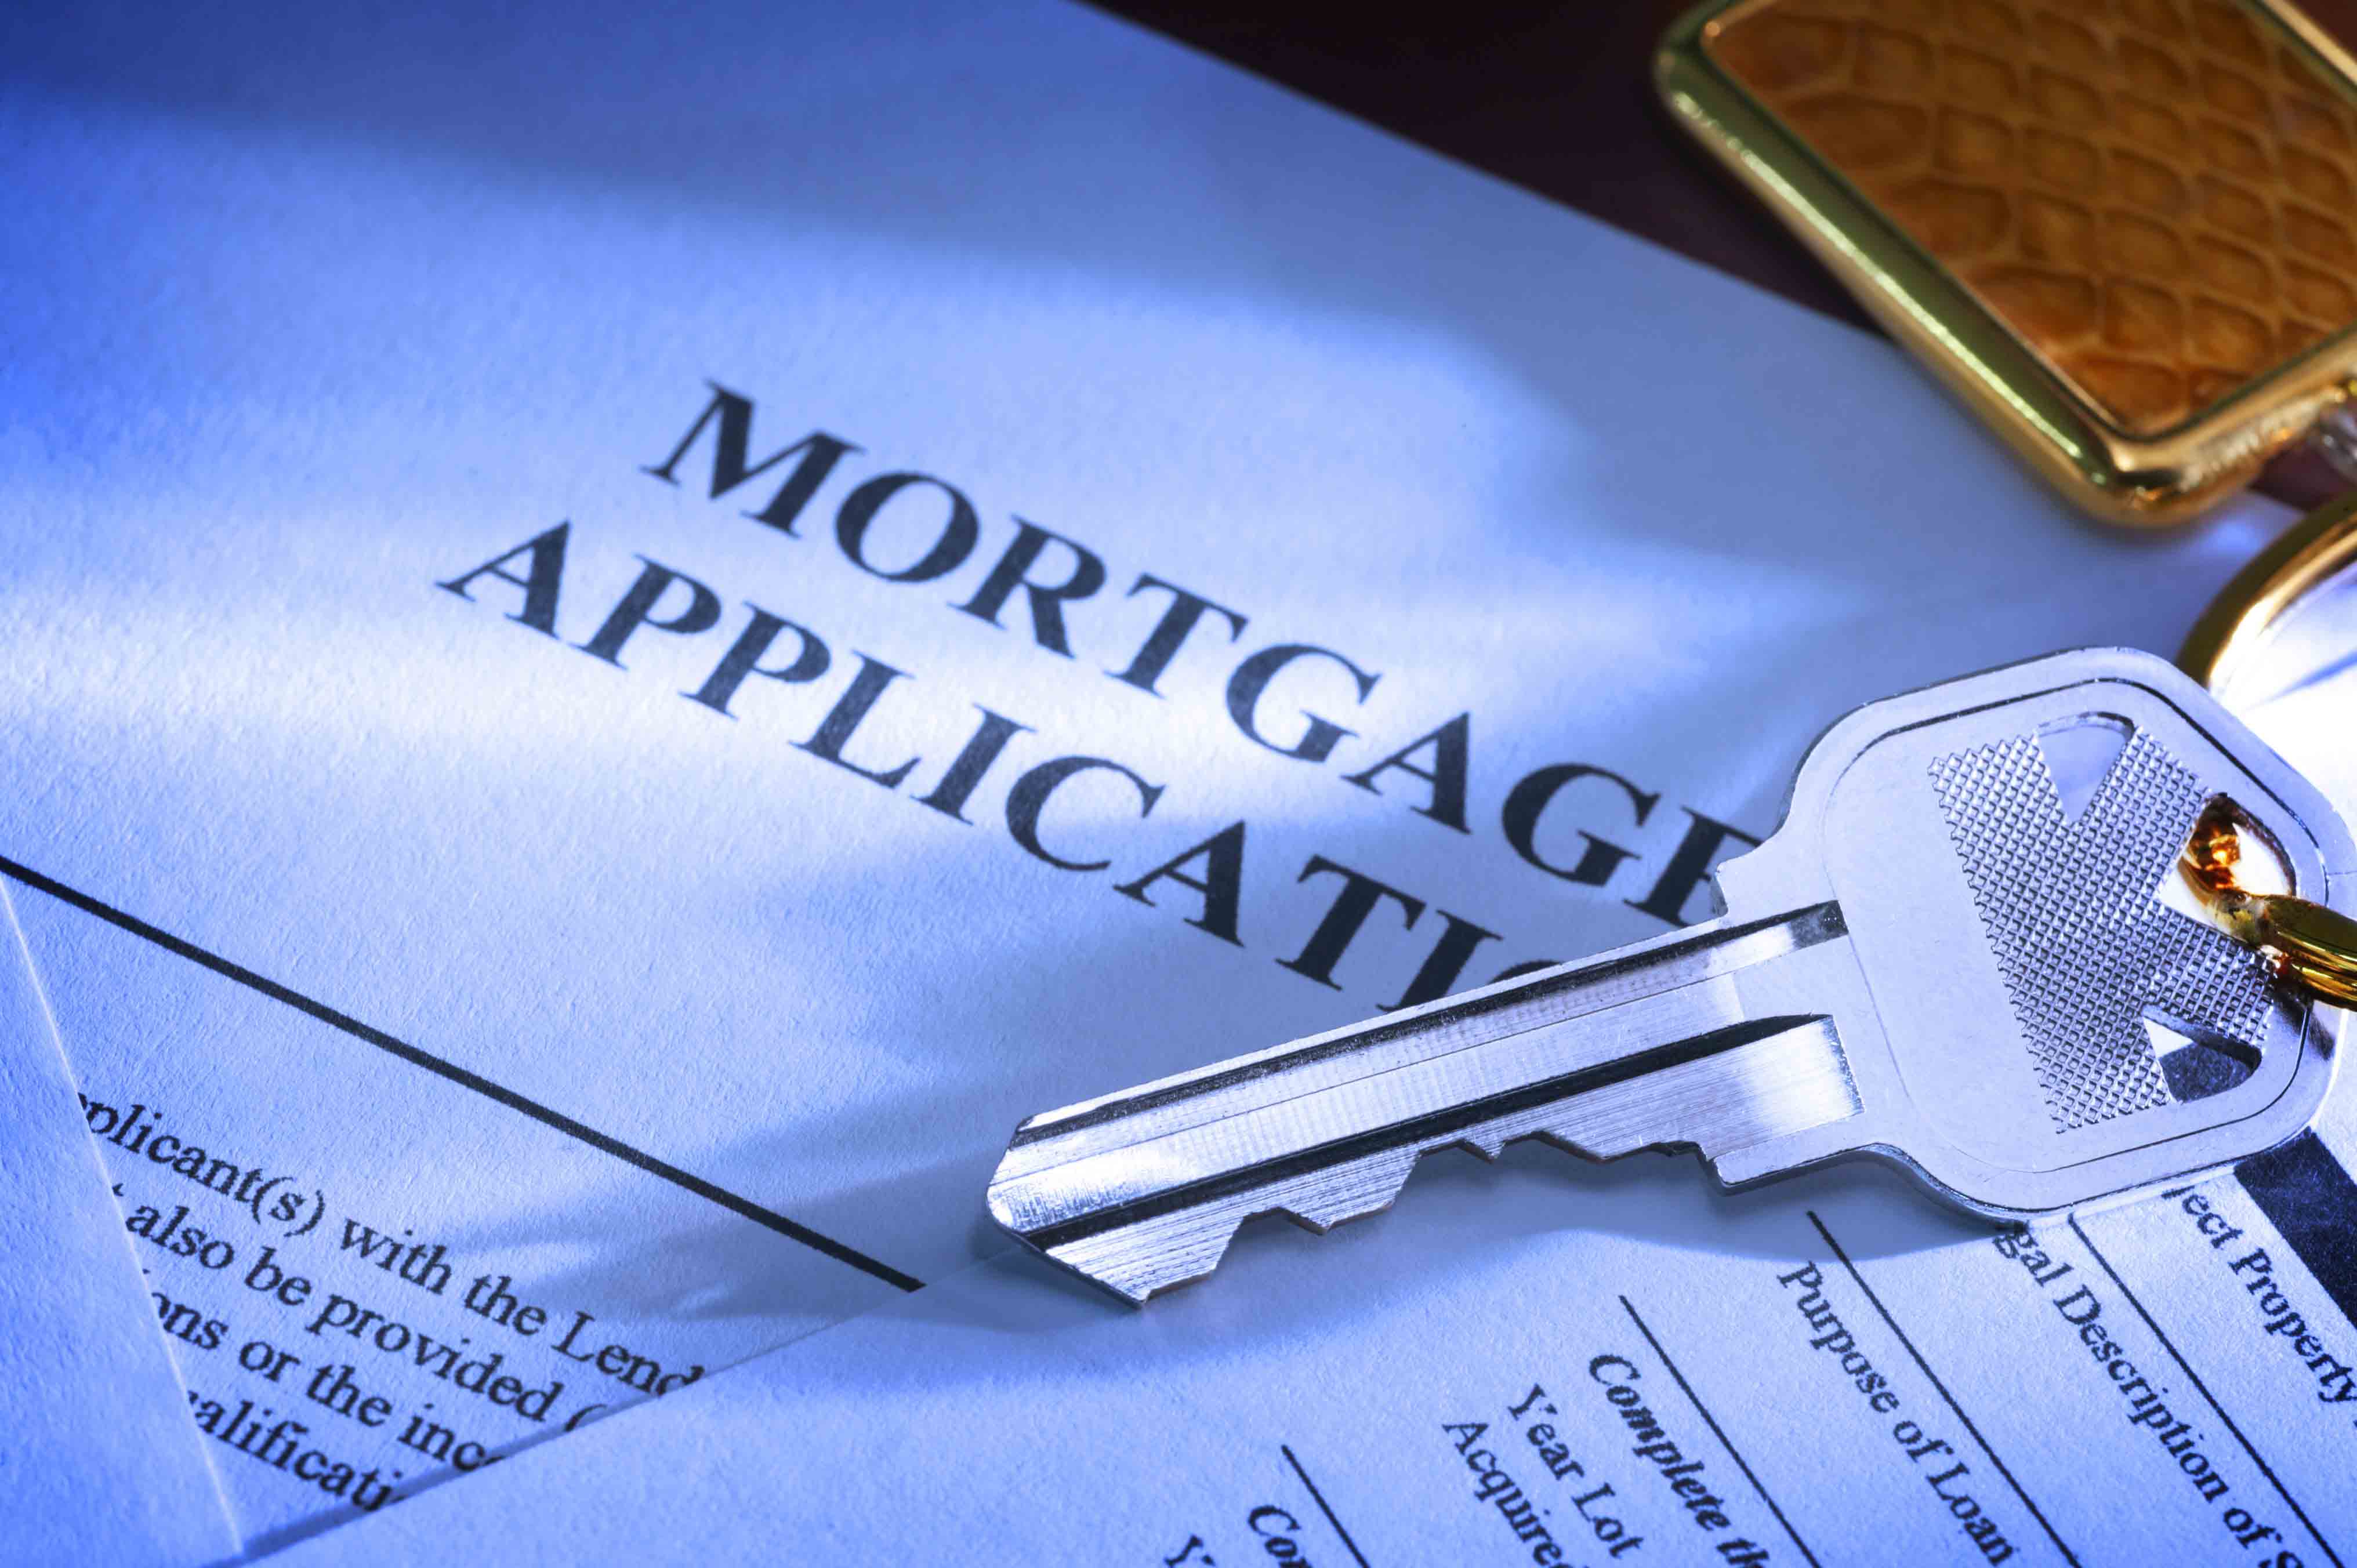 mortgage-application